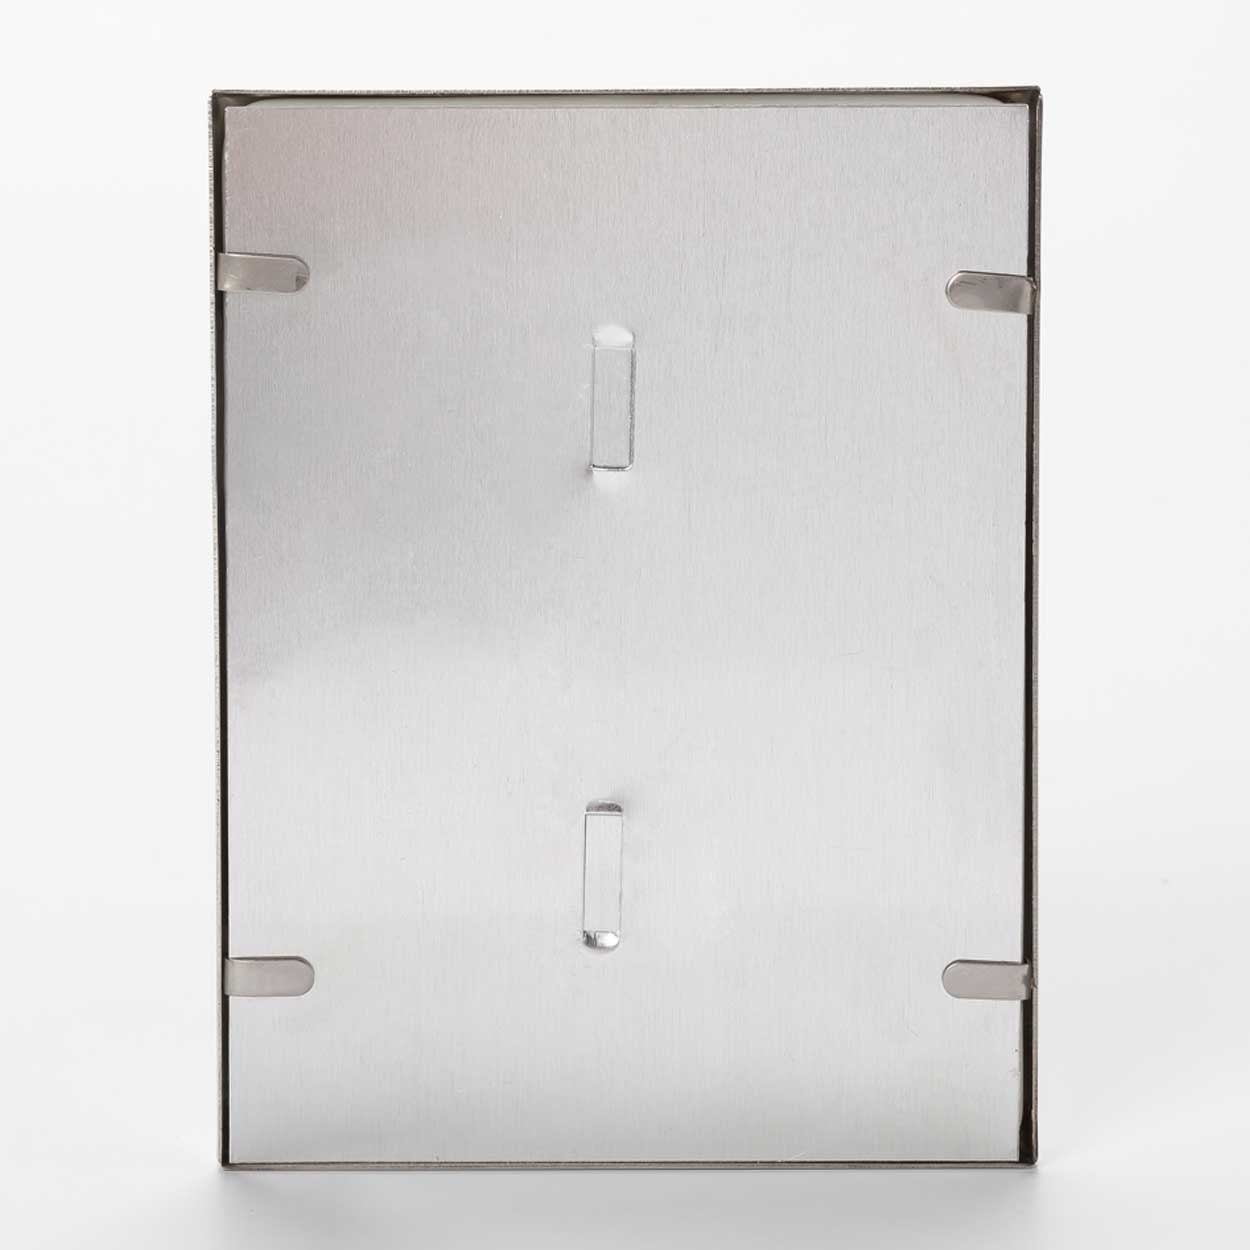 Fotocerámica rectangular con marco de acero inoxidable